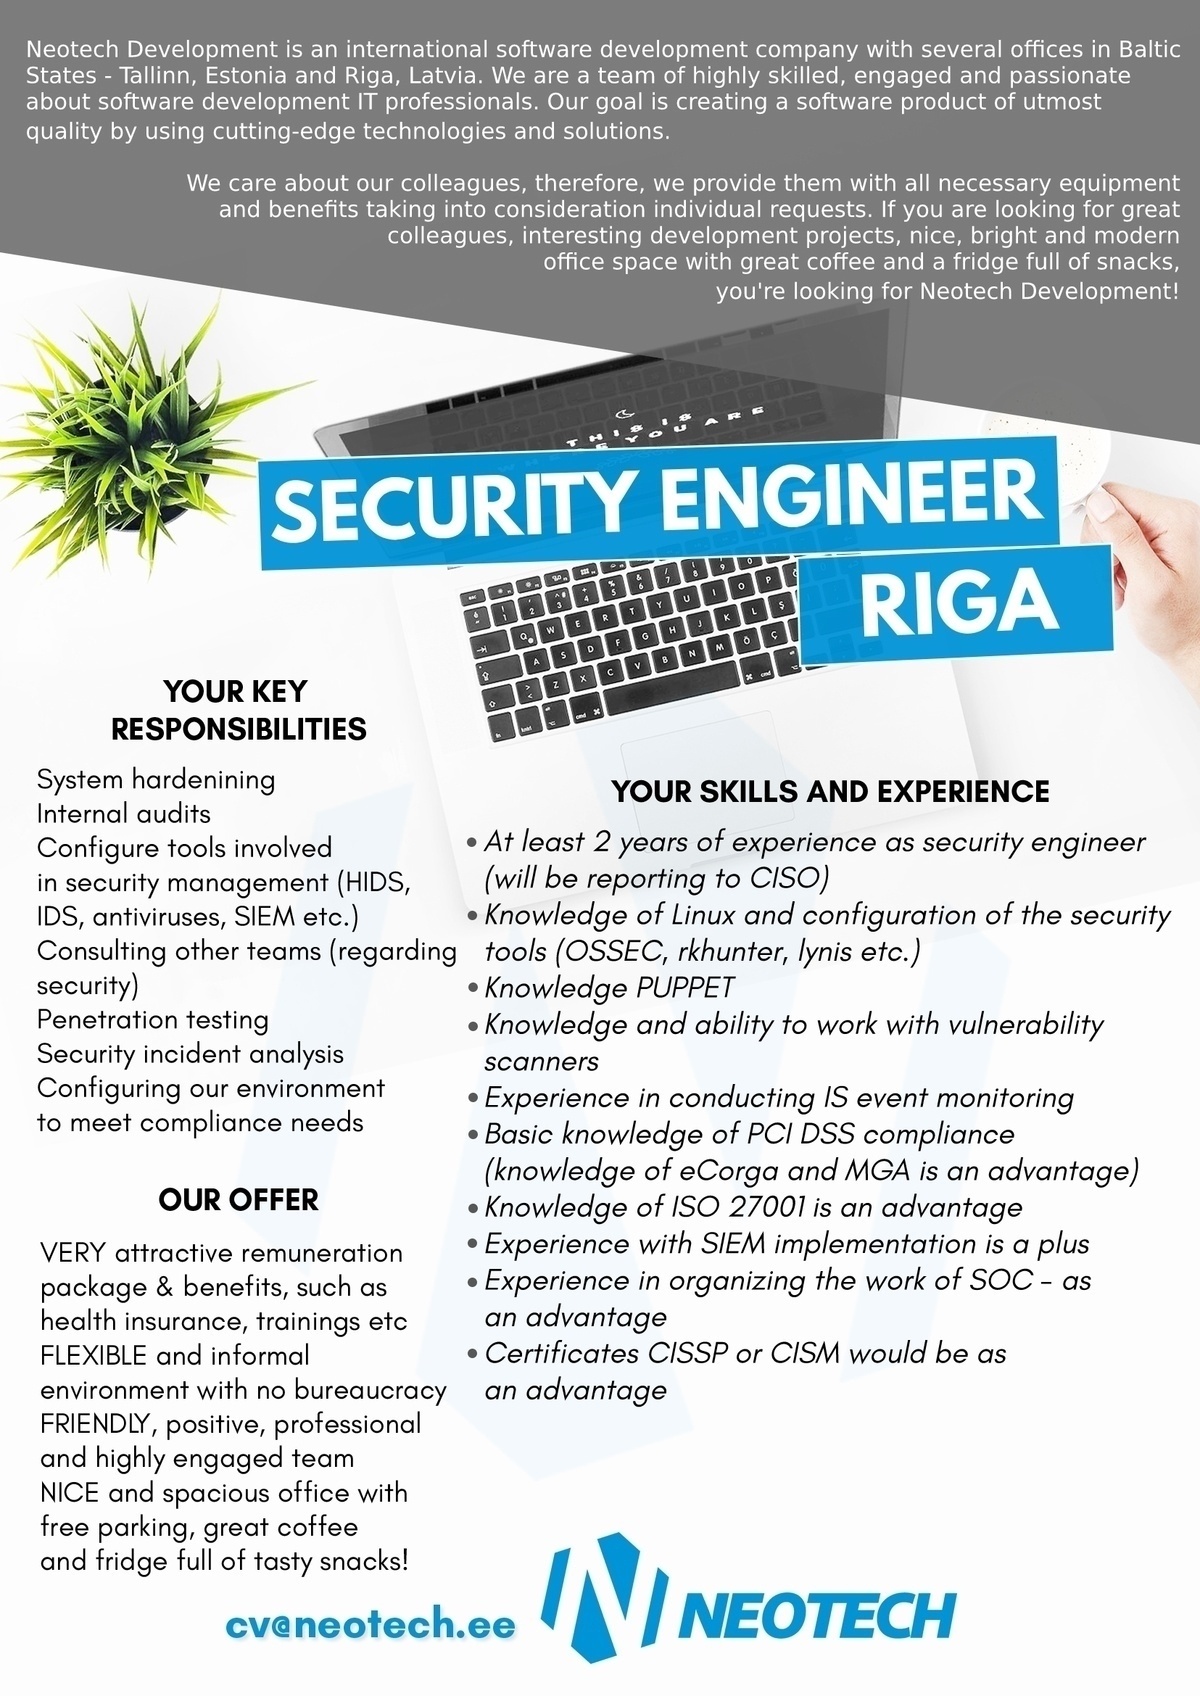 Neotech Development, SIA Security Engineer